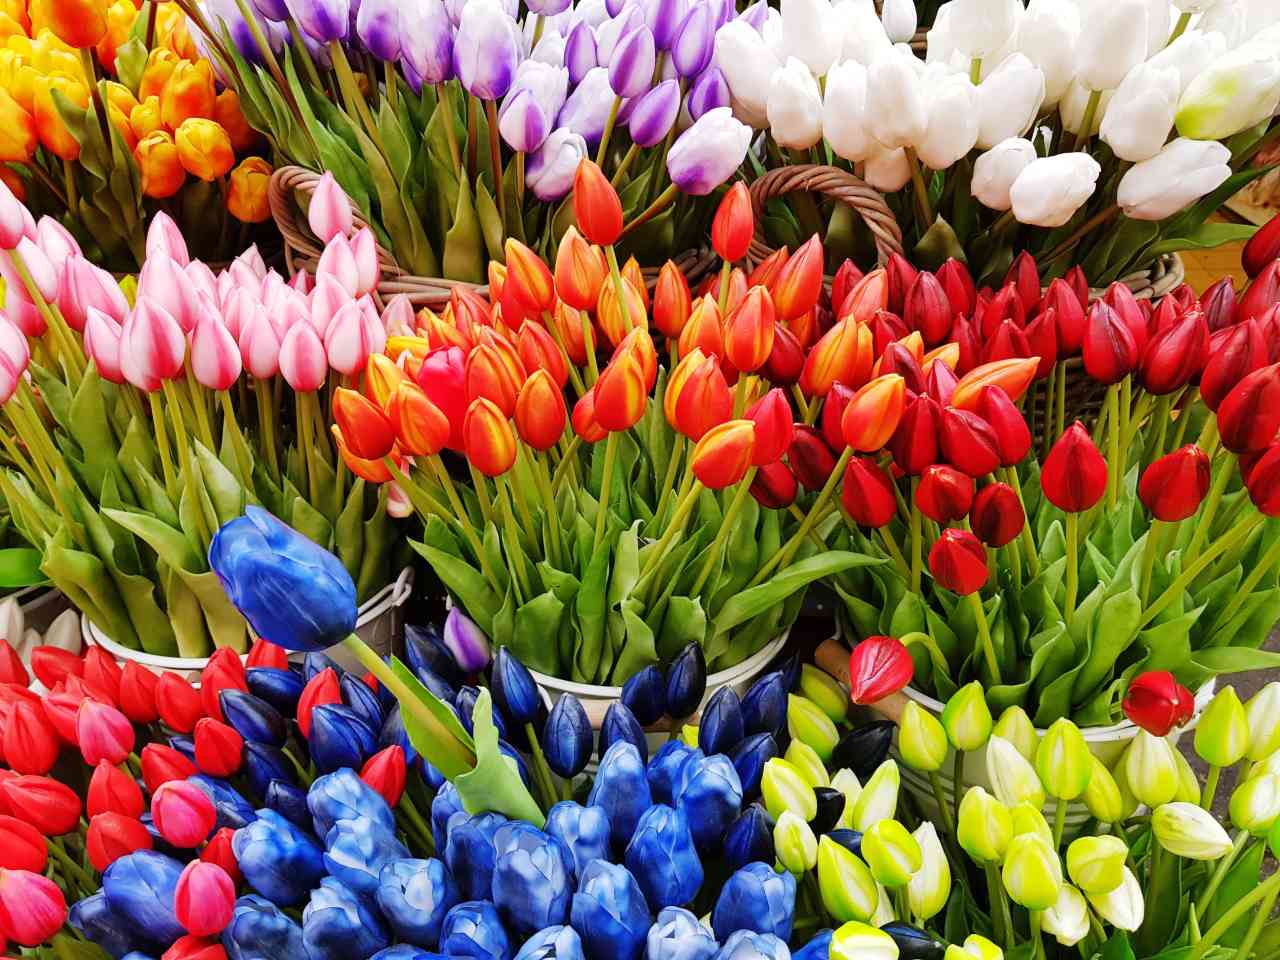 tulips-blooming-in-amsterdam-flower-market-2022-11-15-02-18-52-utc_s.jpg